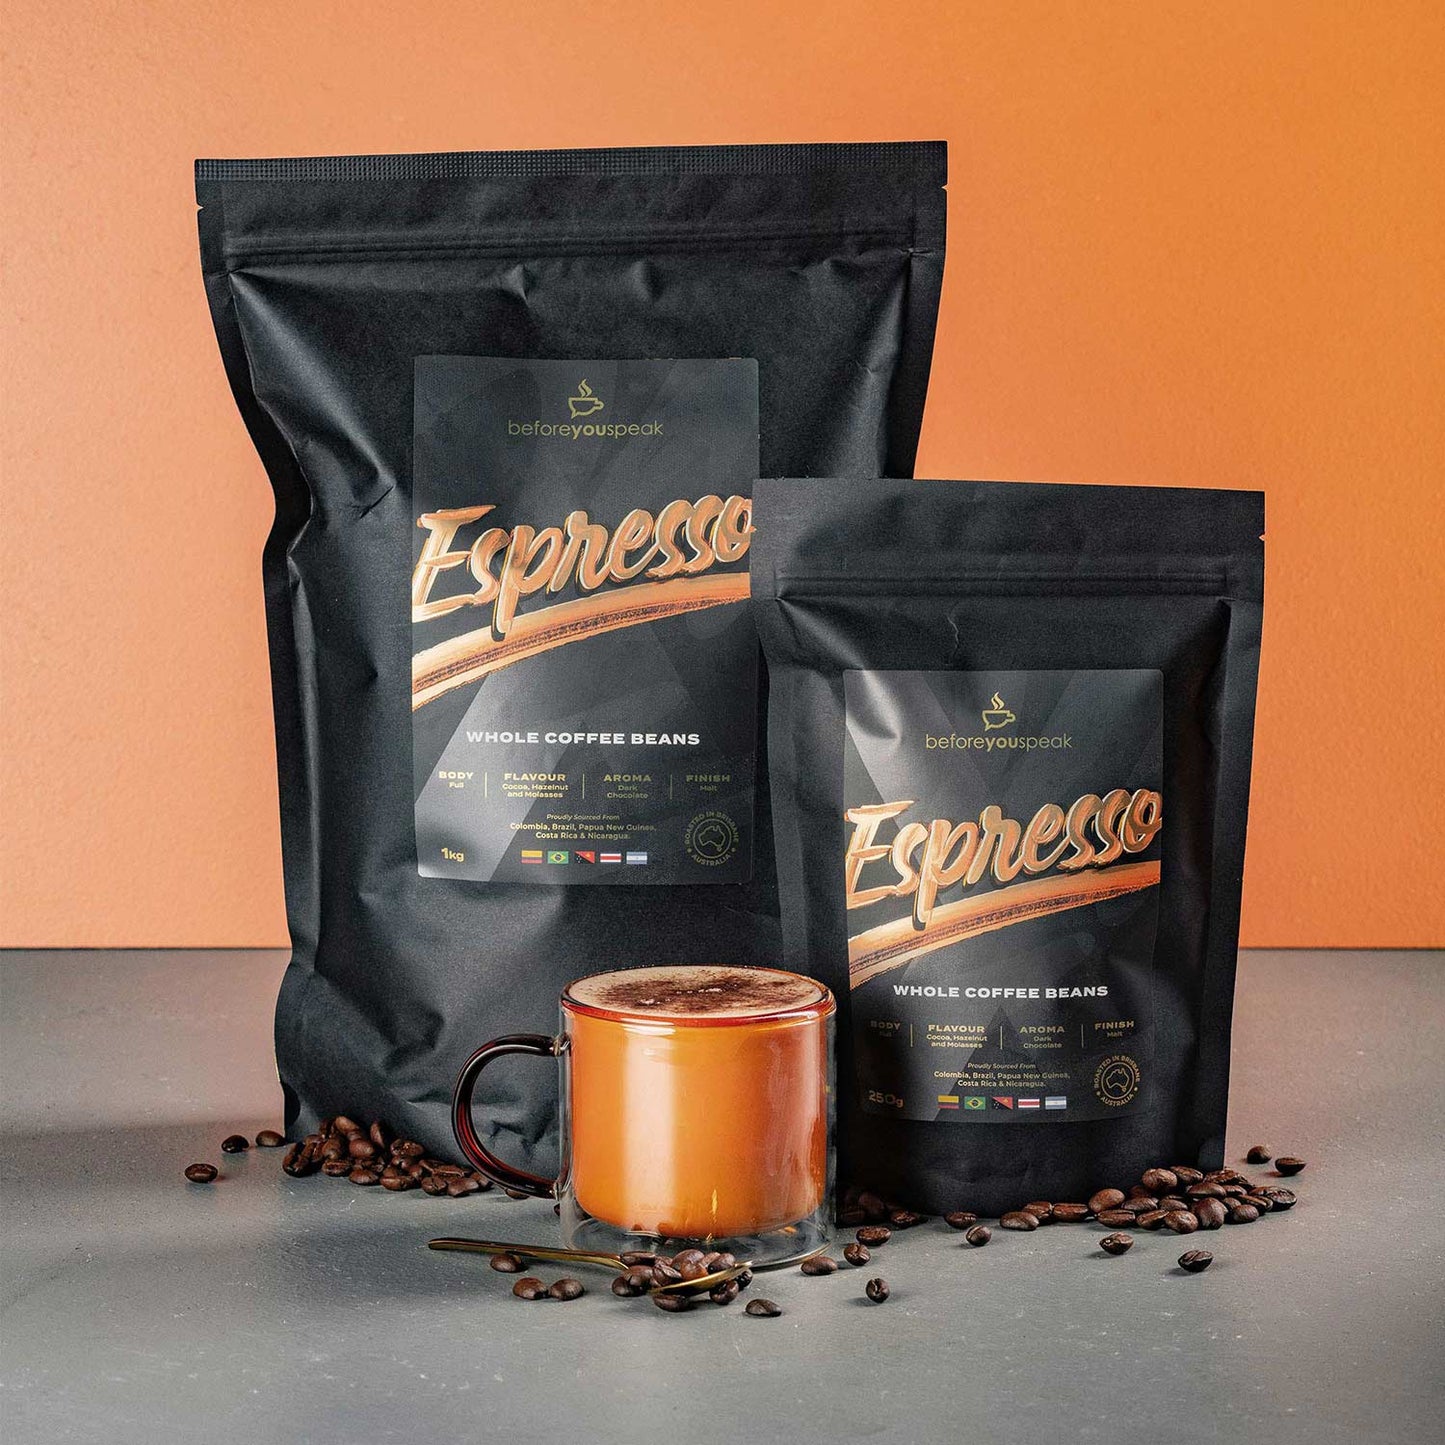 Espresso Whole Coffee Beans